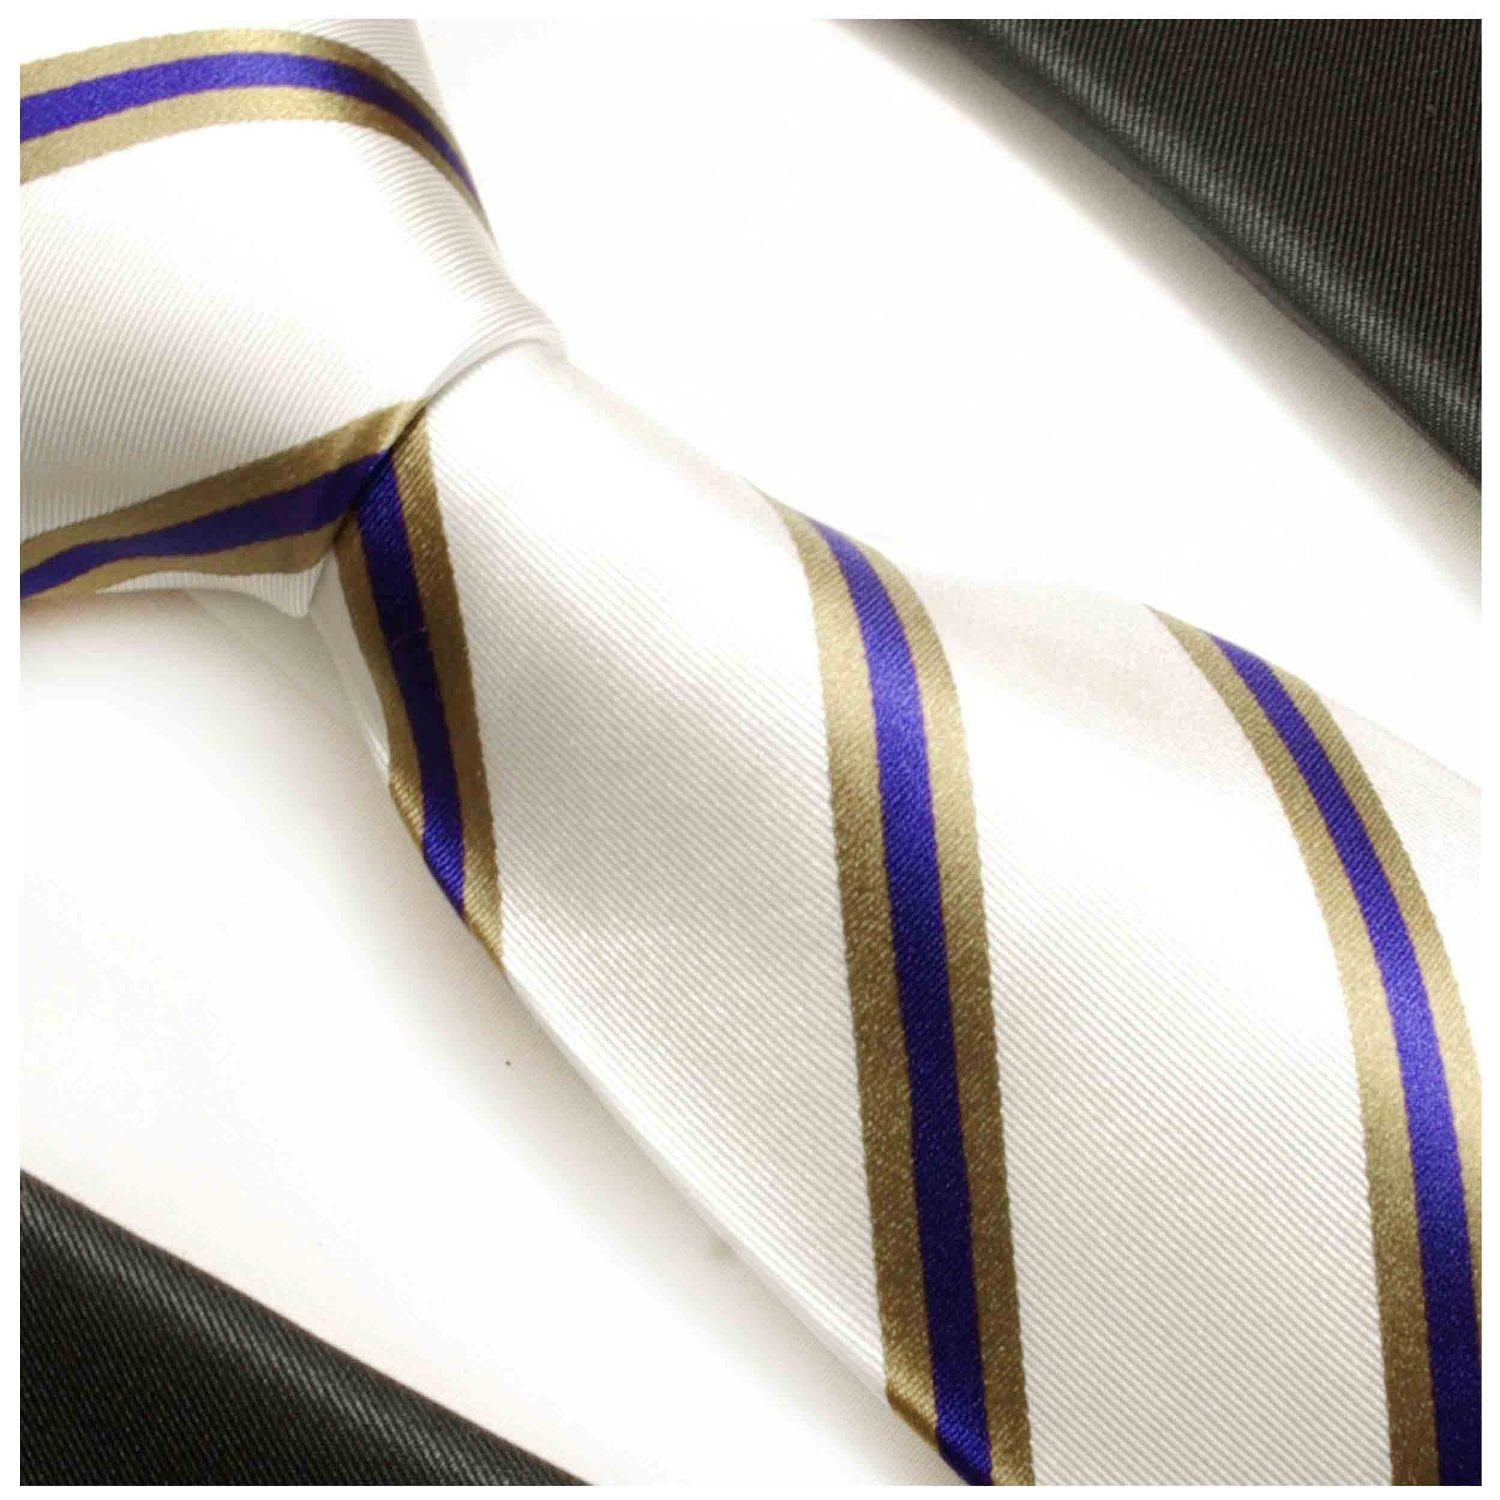 Paul Malone Krawatte Moderne blau gold Herren Seide 782 Seidenkrawatte 100% weiß (8cm), gestreift Breit